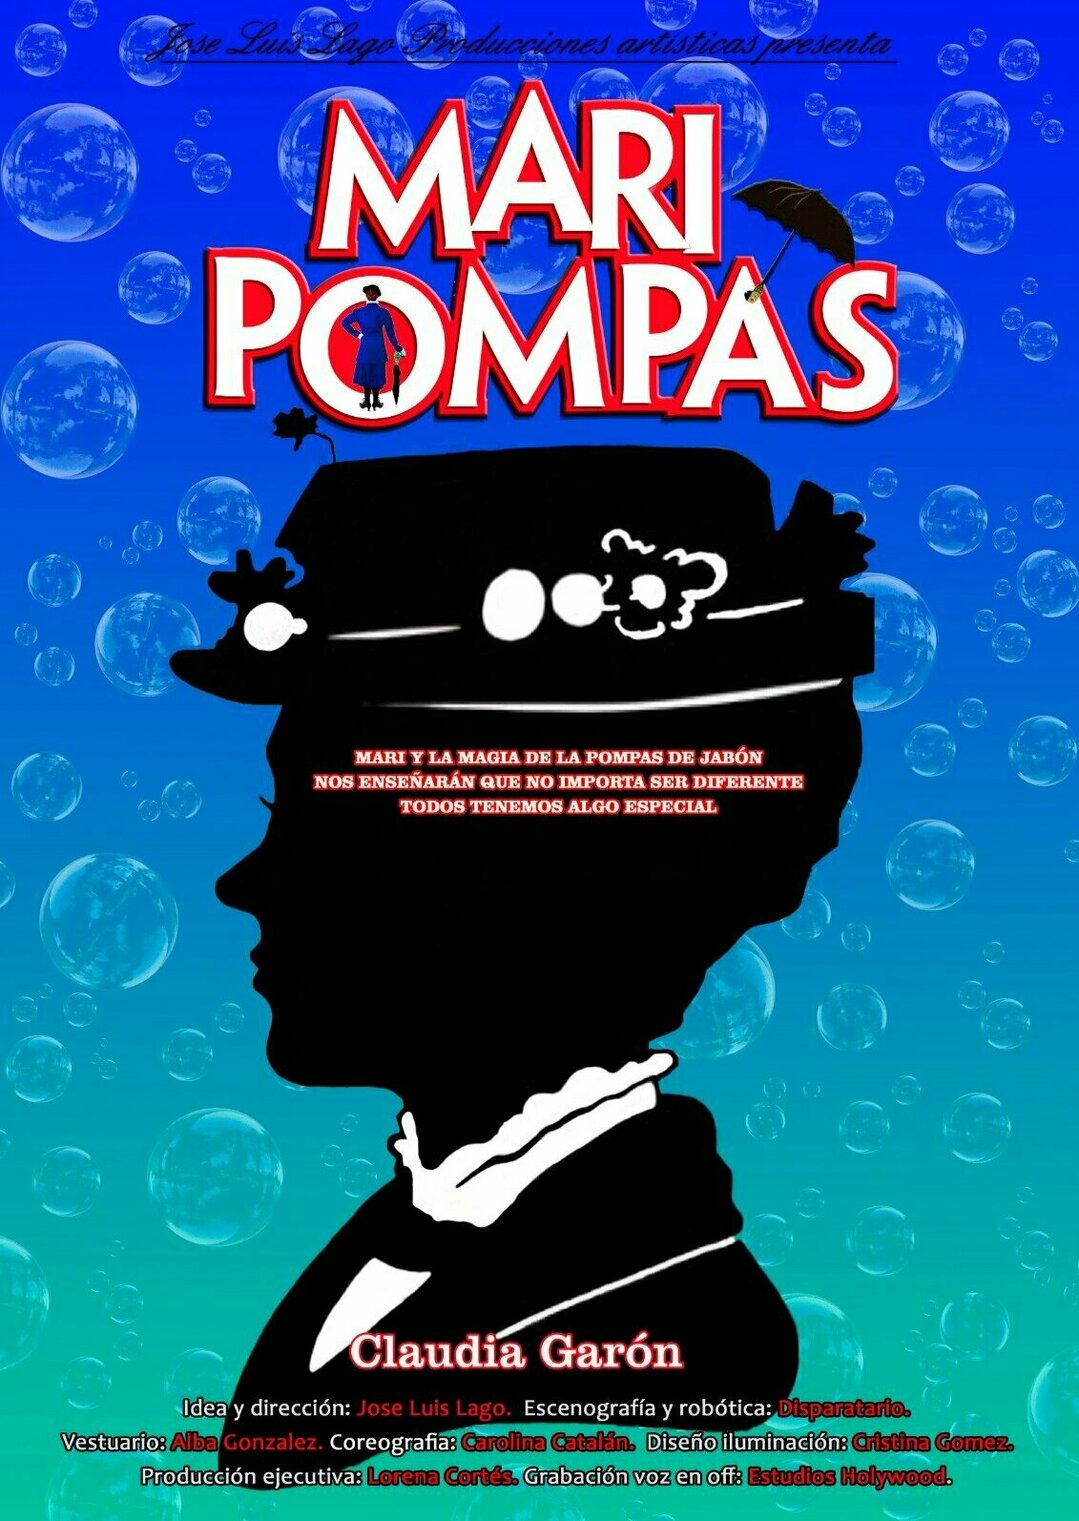 Teatro musical "Mari Pompas" en La Adrada